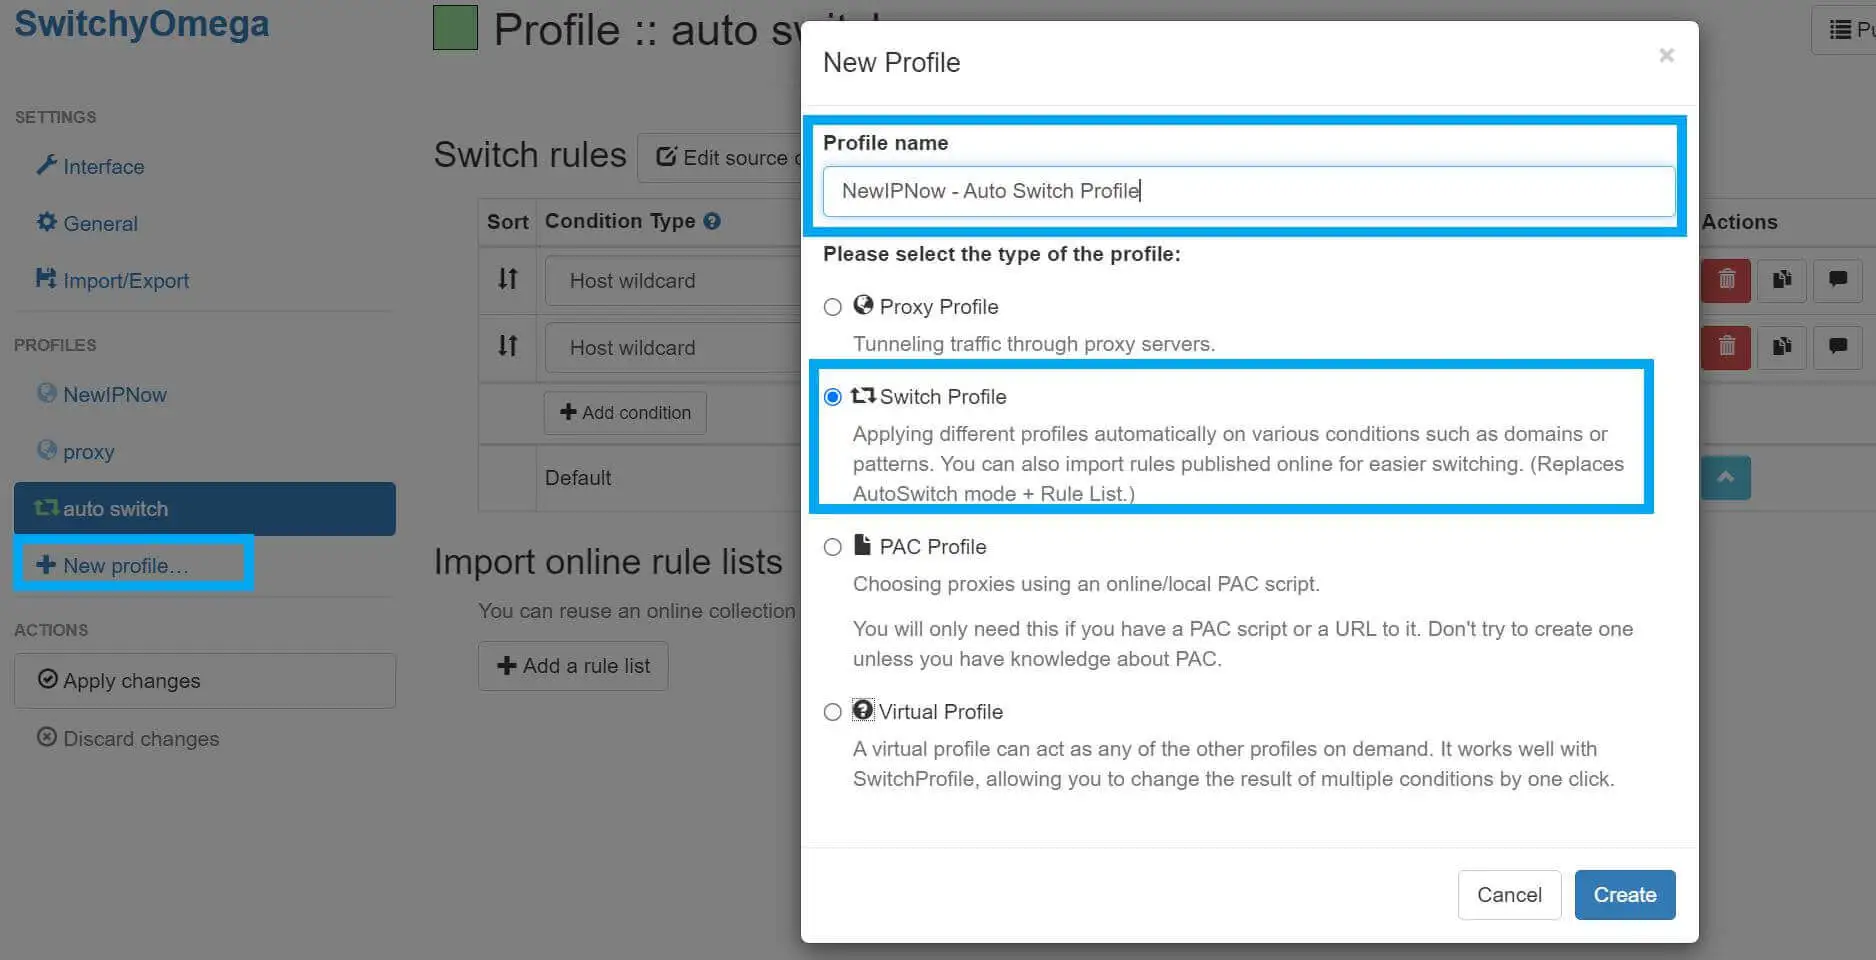 Create an Auto Switch Proxy Profile